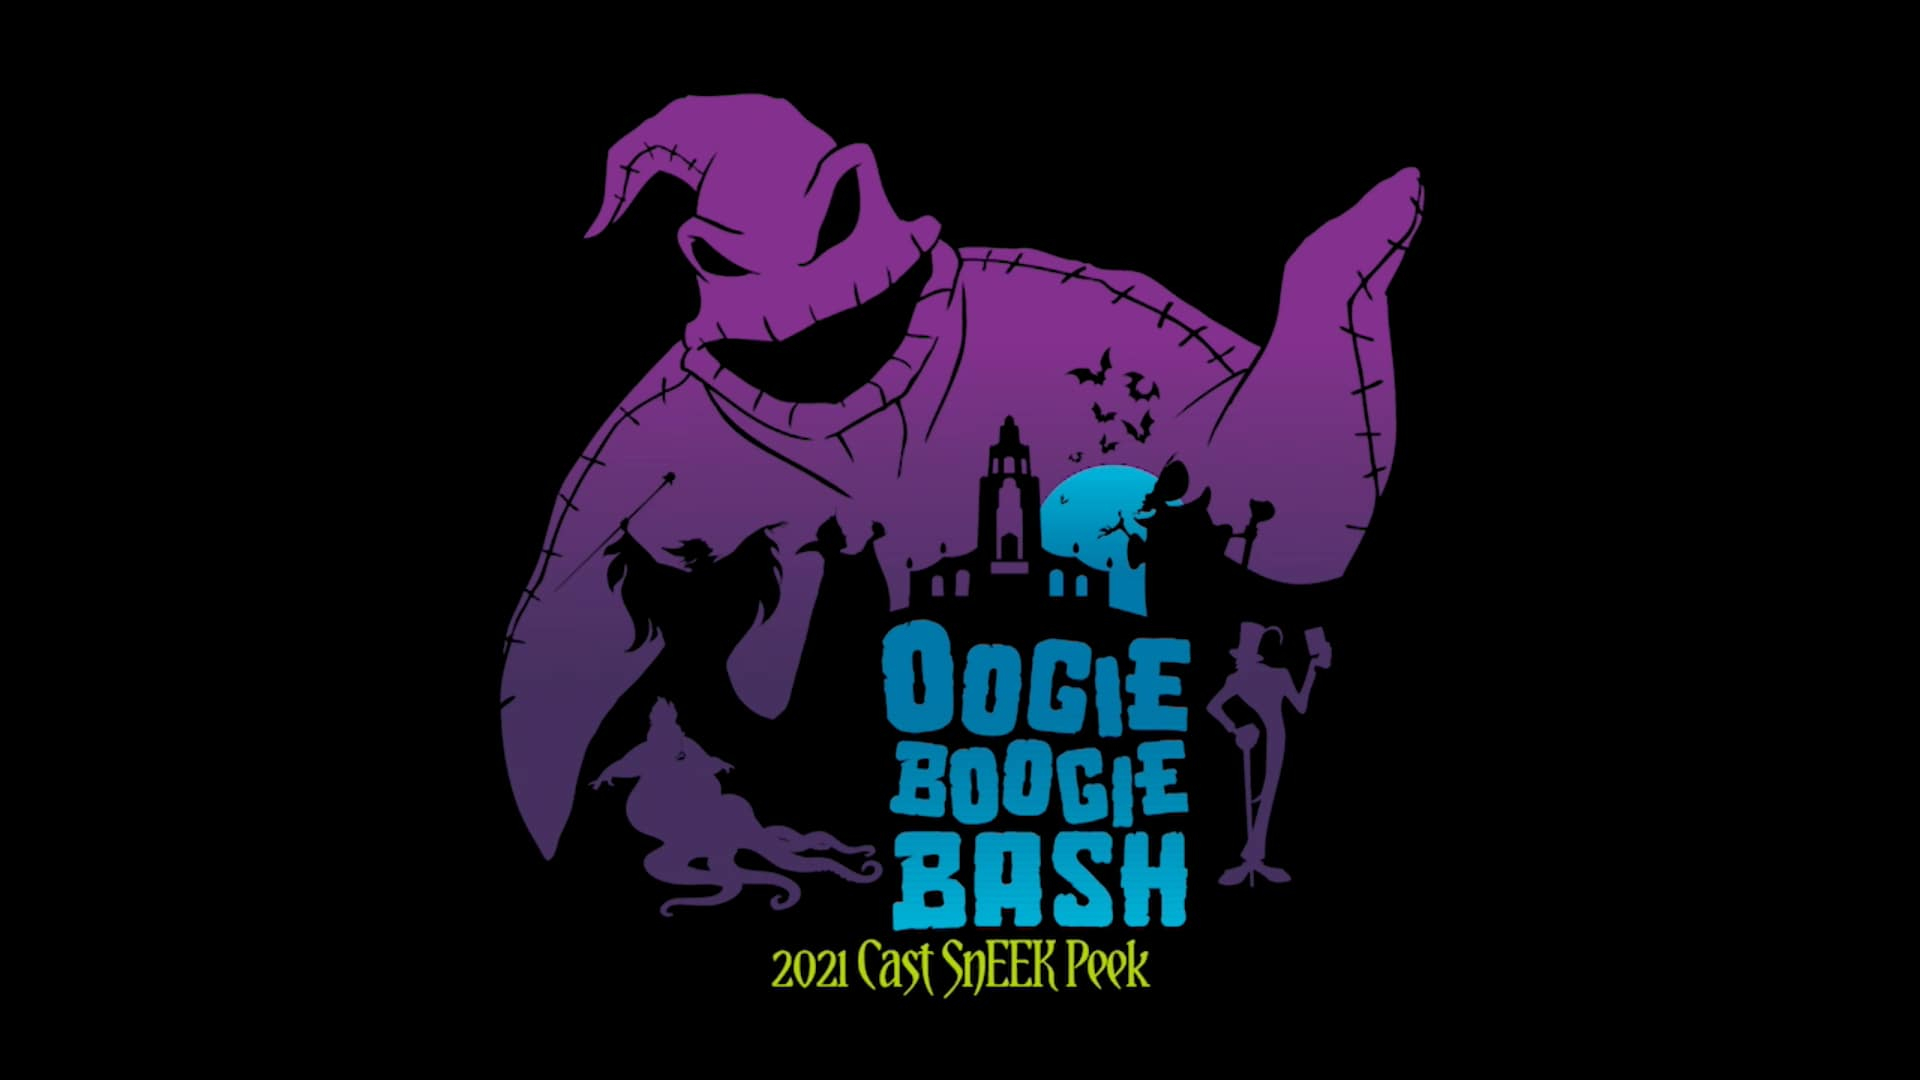 1920x1080 Oogie Boogie Bash Cast Preview Brings Back Spooky Magic | Disney Parks Blog